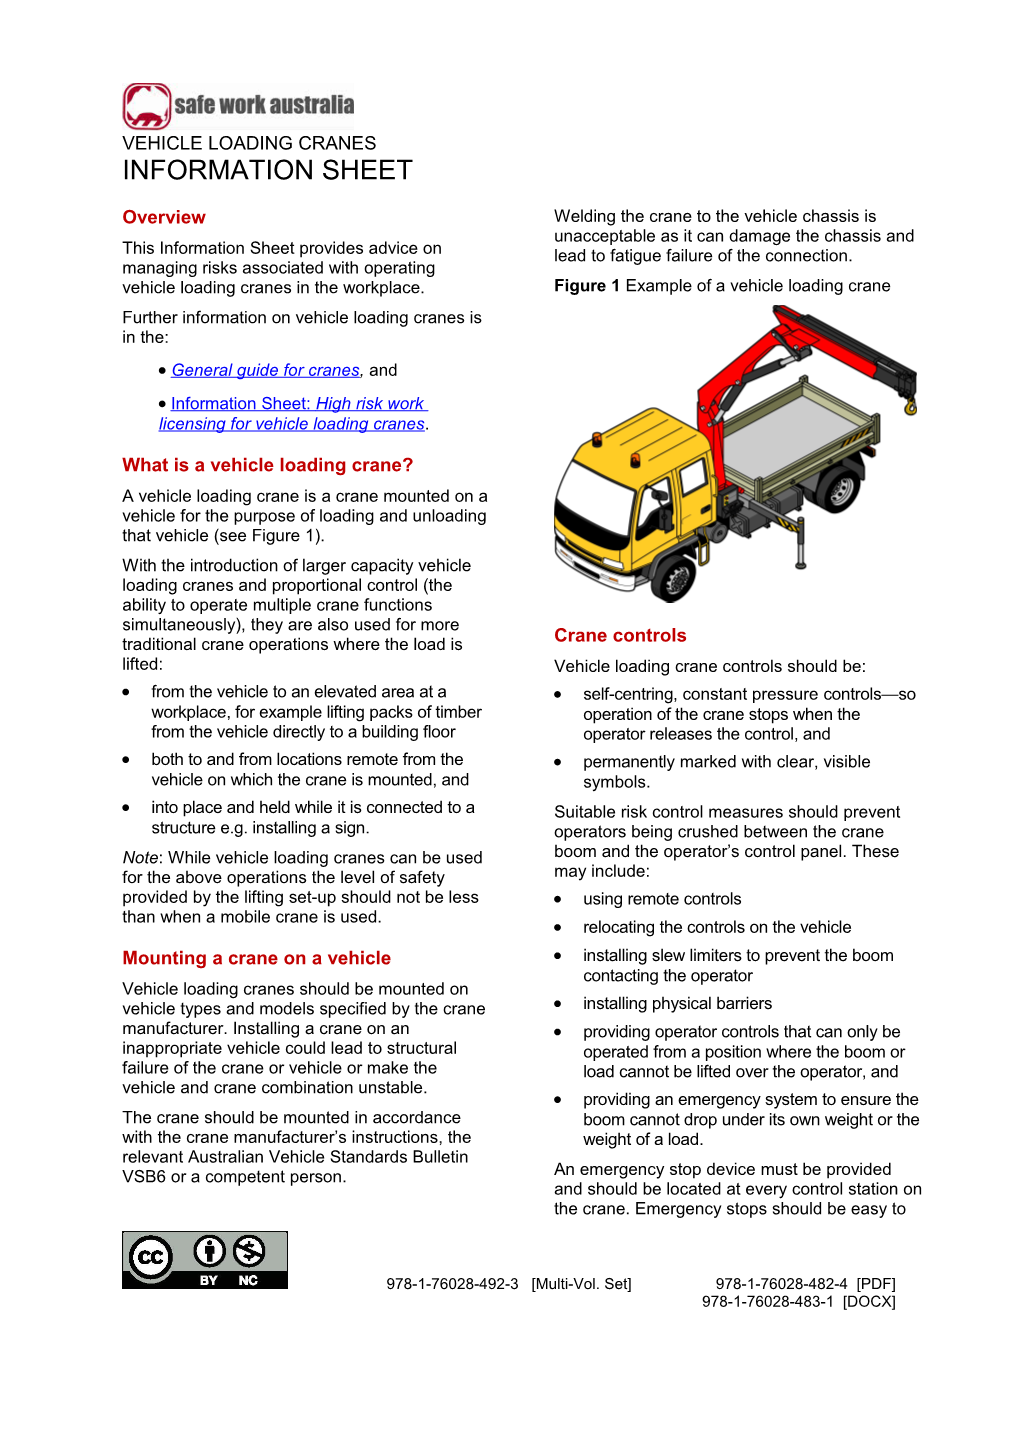 07. Vehicle Loading Cranes Information Sheet